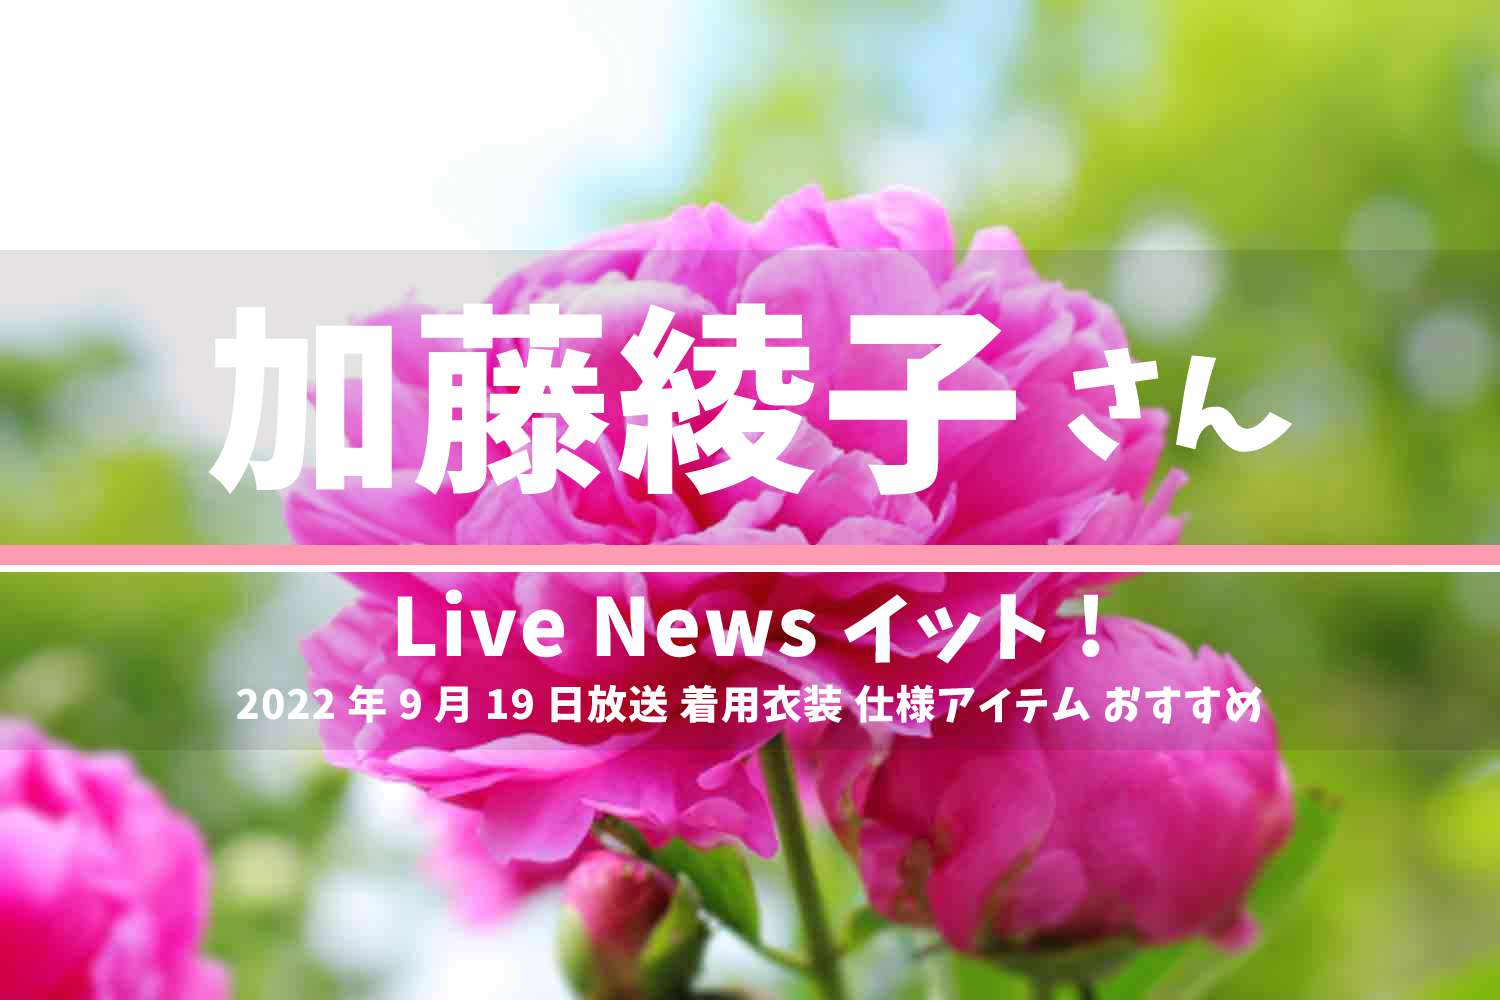 Live News イット! 加藤綾子さん 番組 衣装 2022年9月19日放送